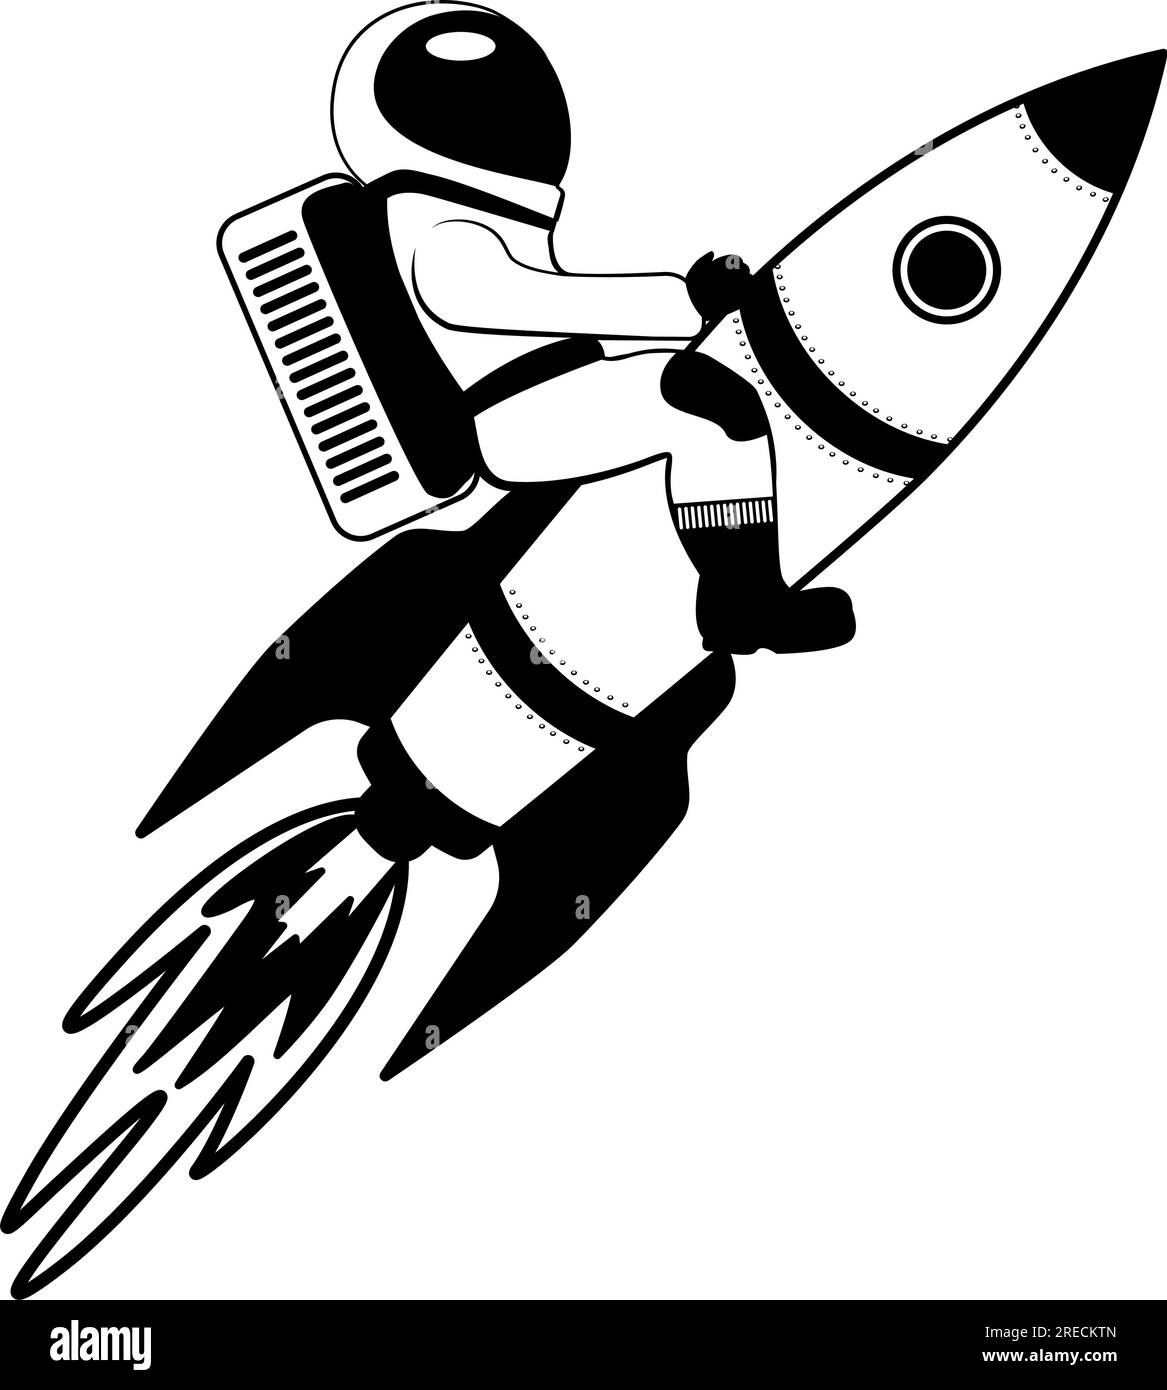 Astronaut riding a rocket spaceship. Cartoon flat vector illustration Stock Vector